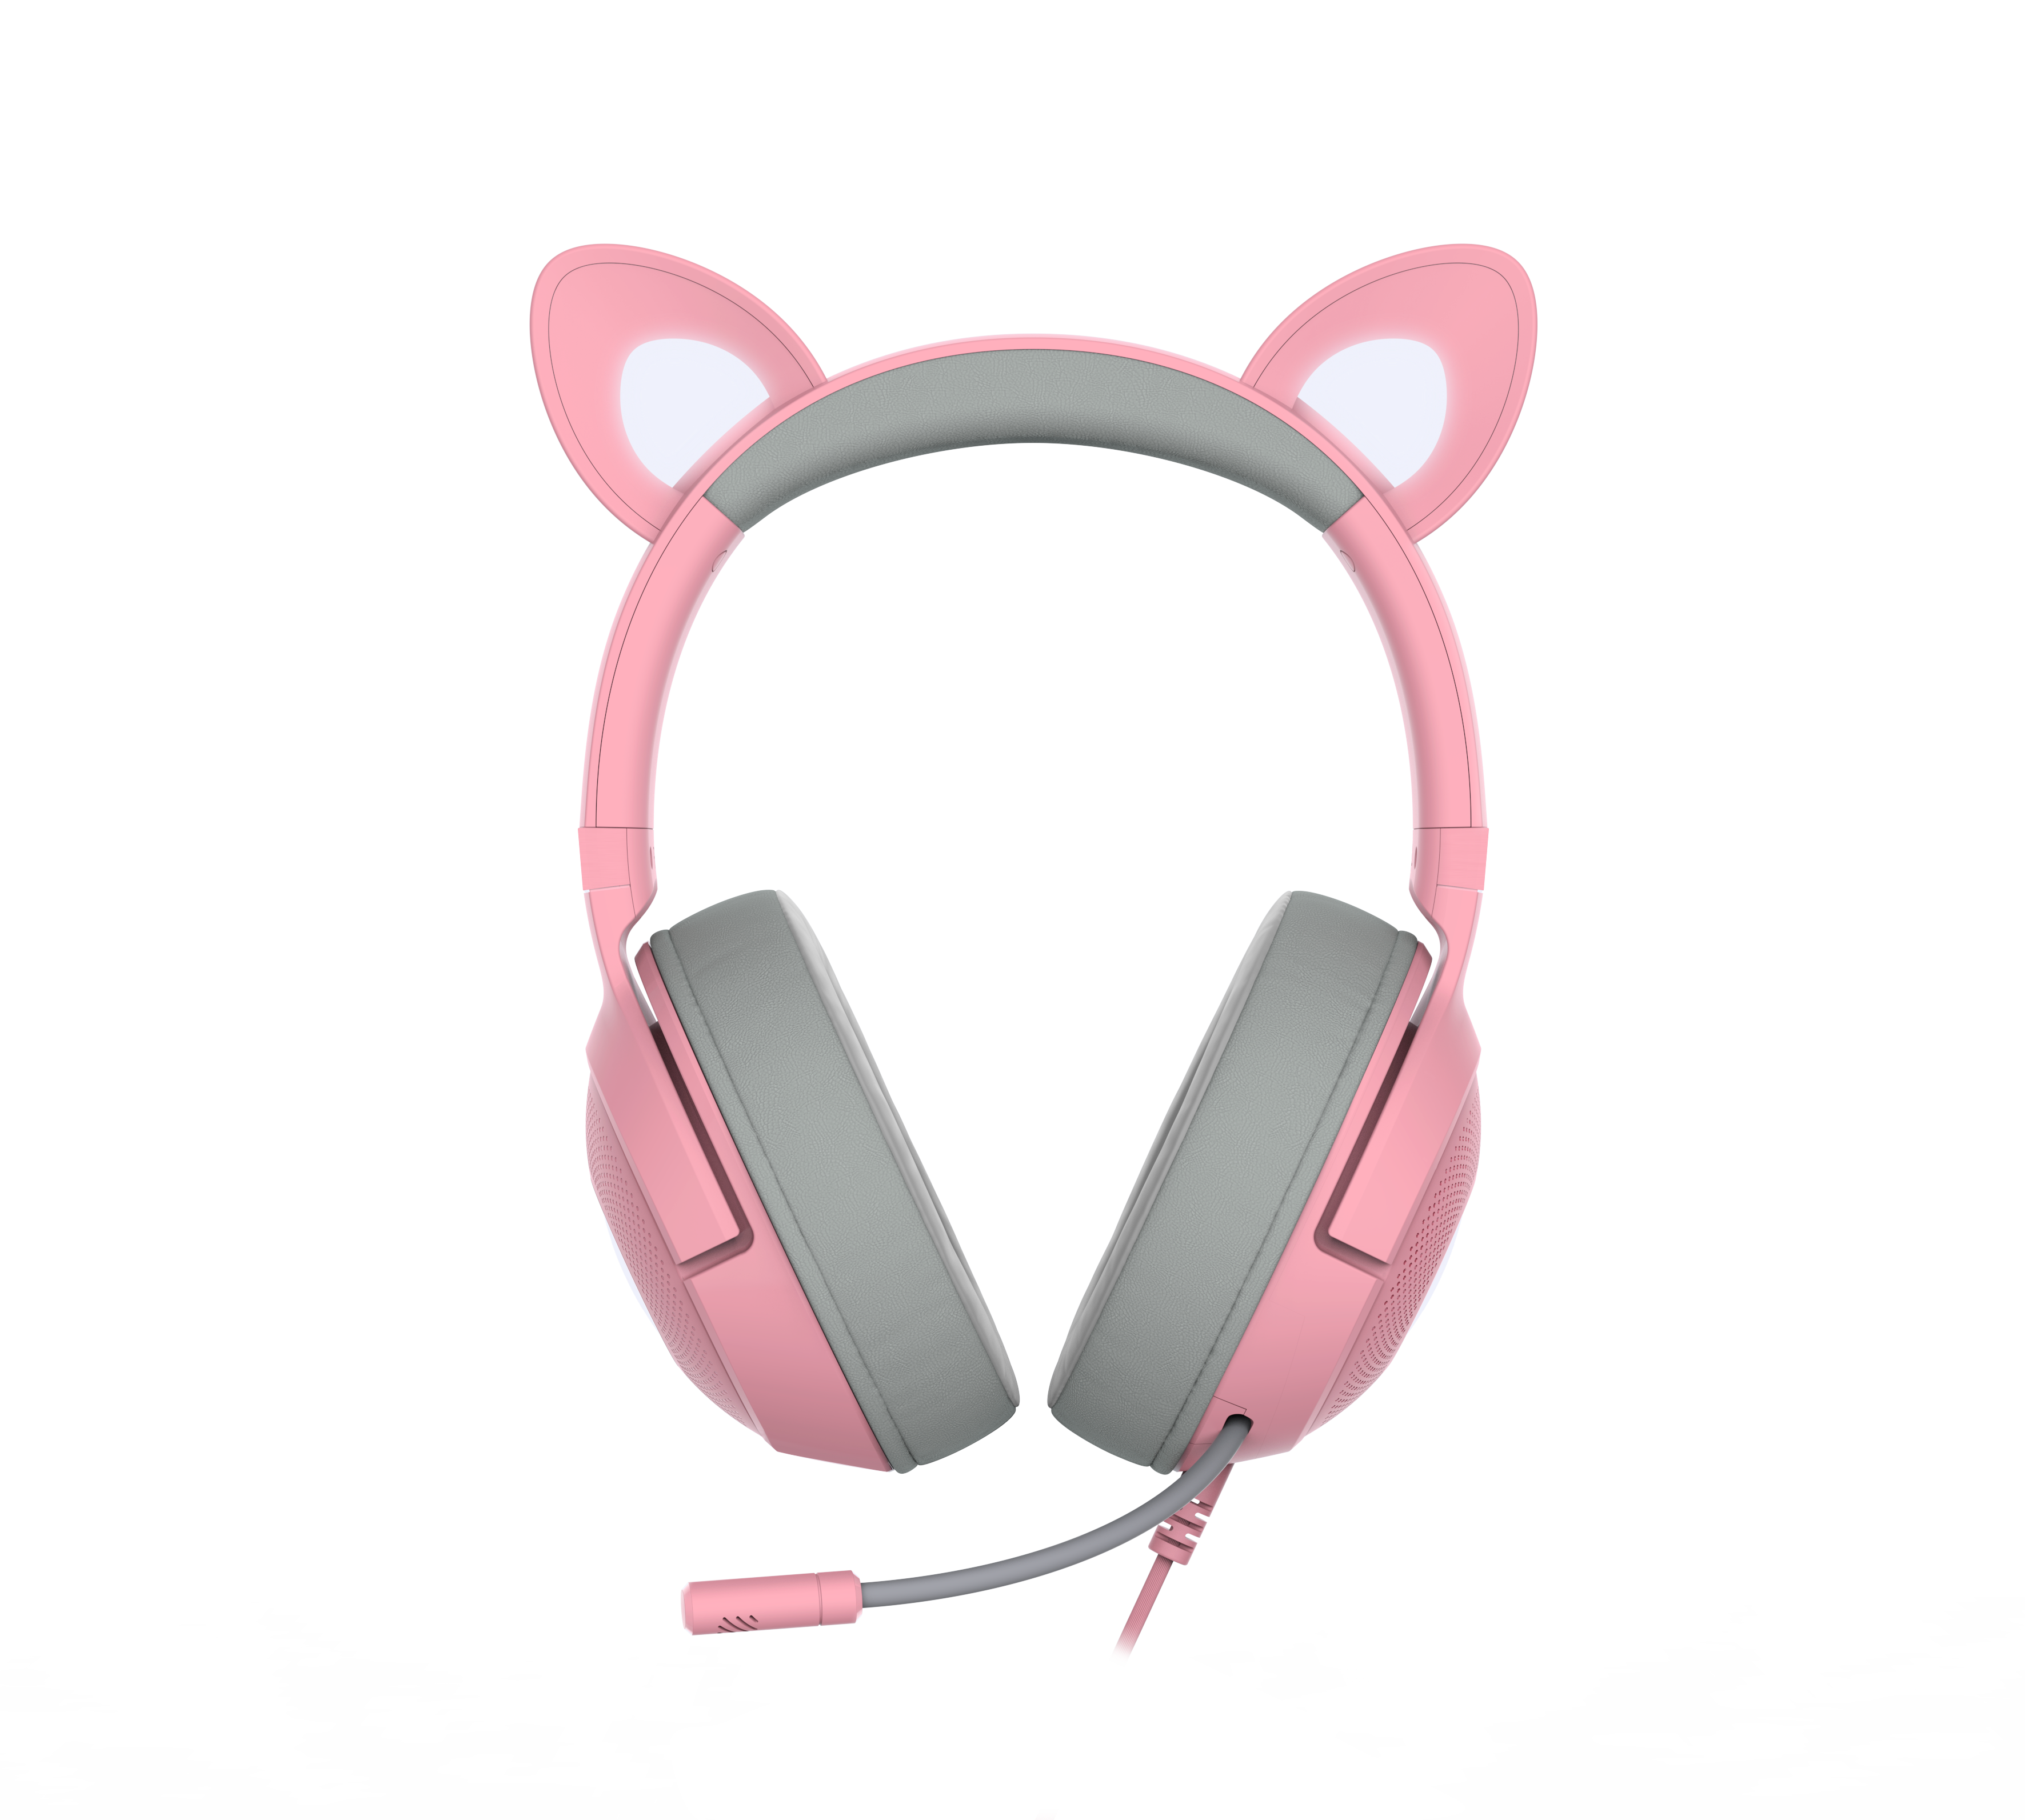 Razer Kraken Kitty Ear USB Headset with RGB Chroma Quartz gaming headphones